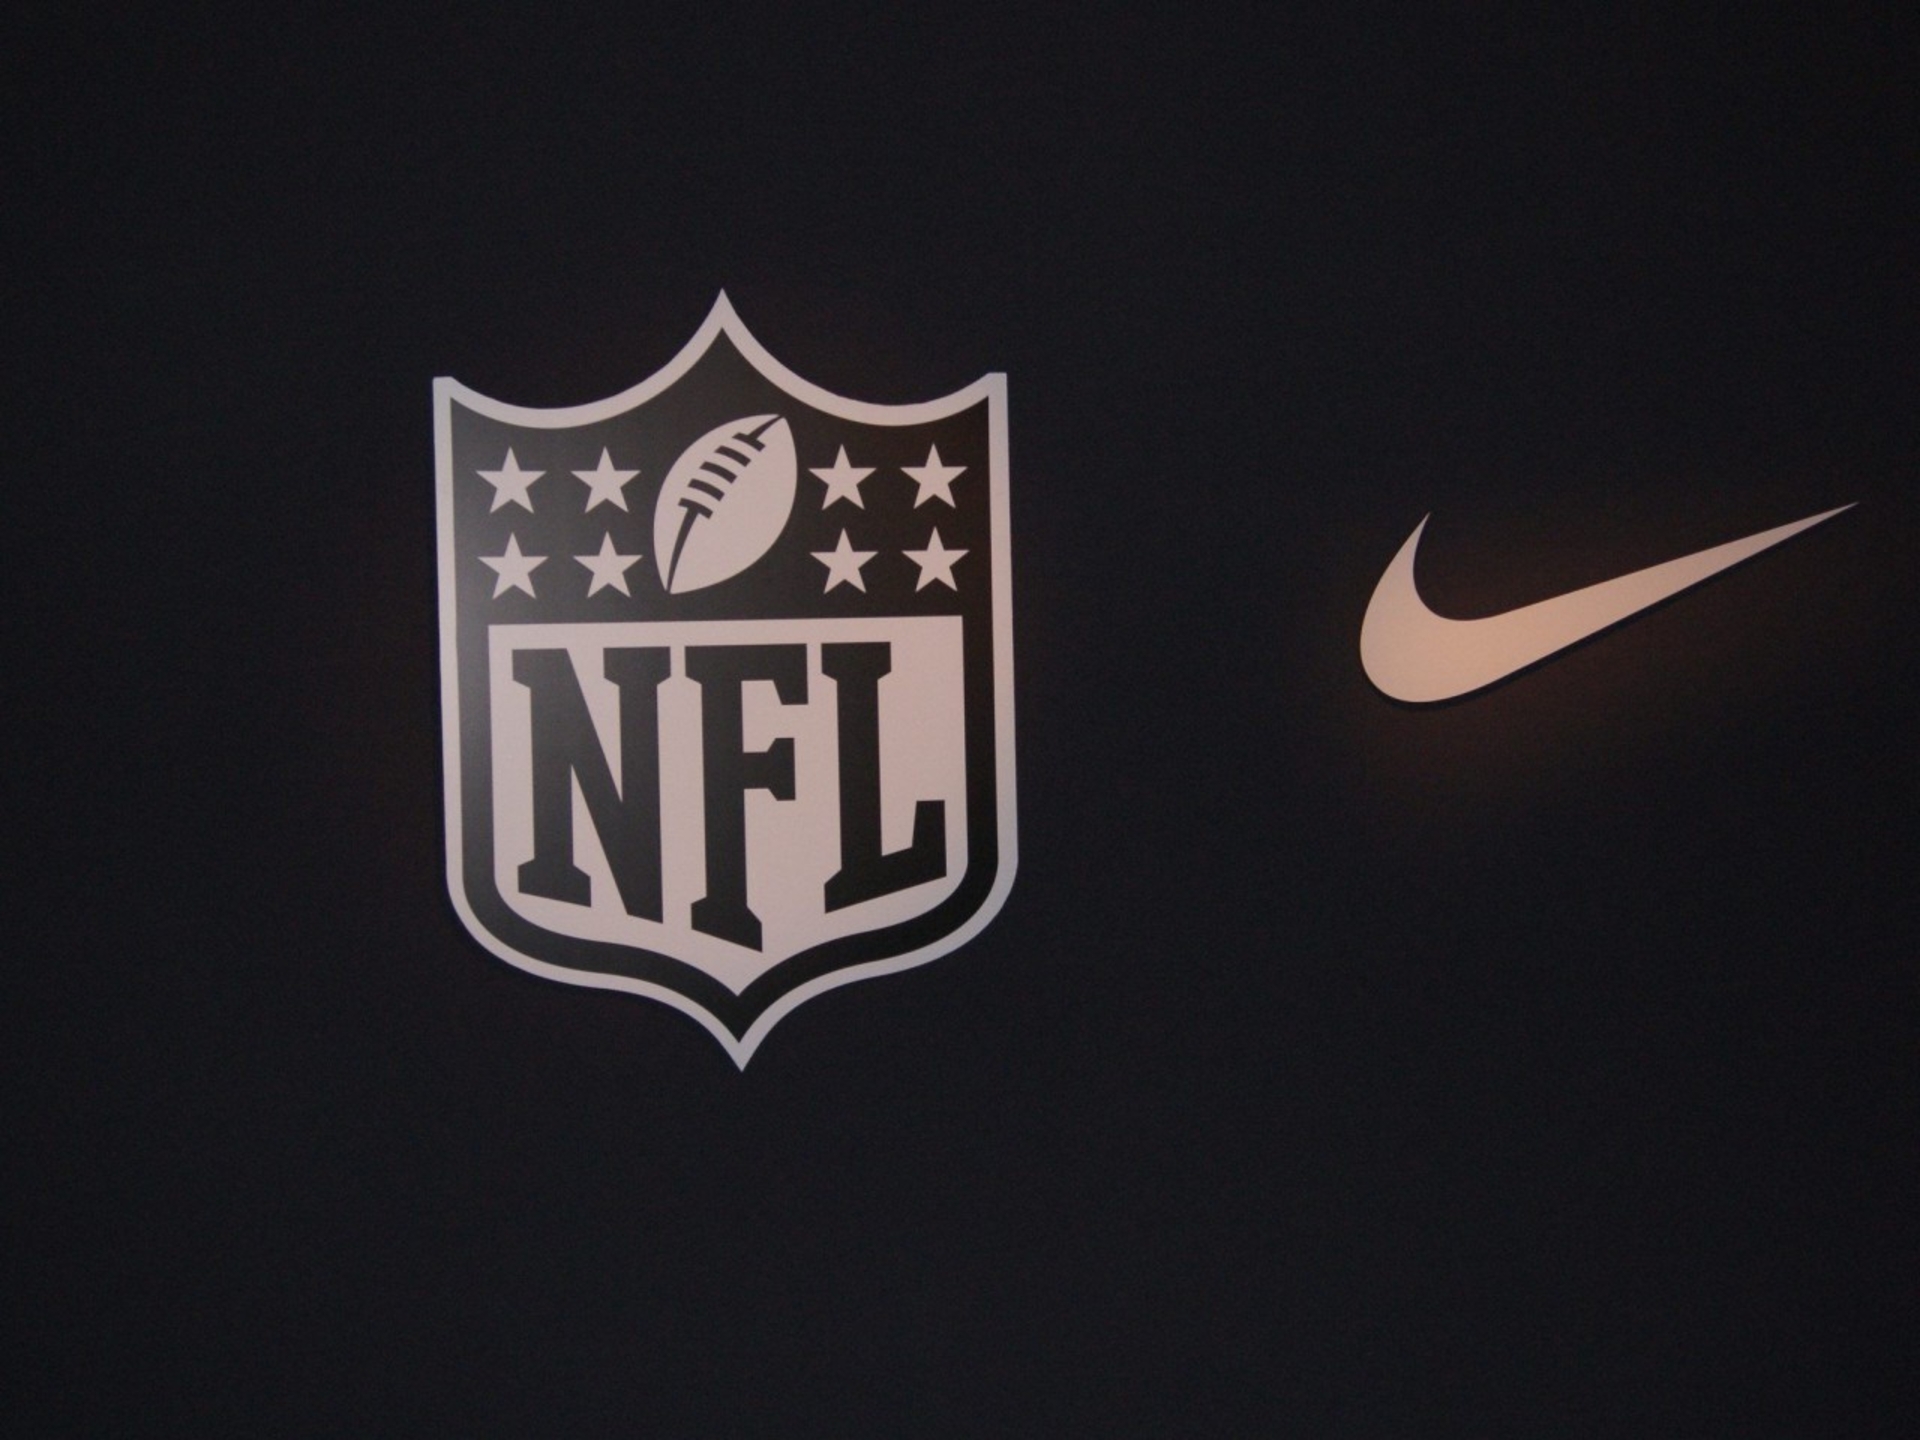 Nike Nfl Football Wallpaper Categories Sports